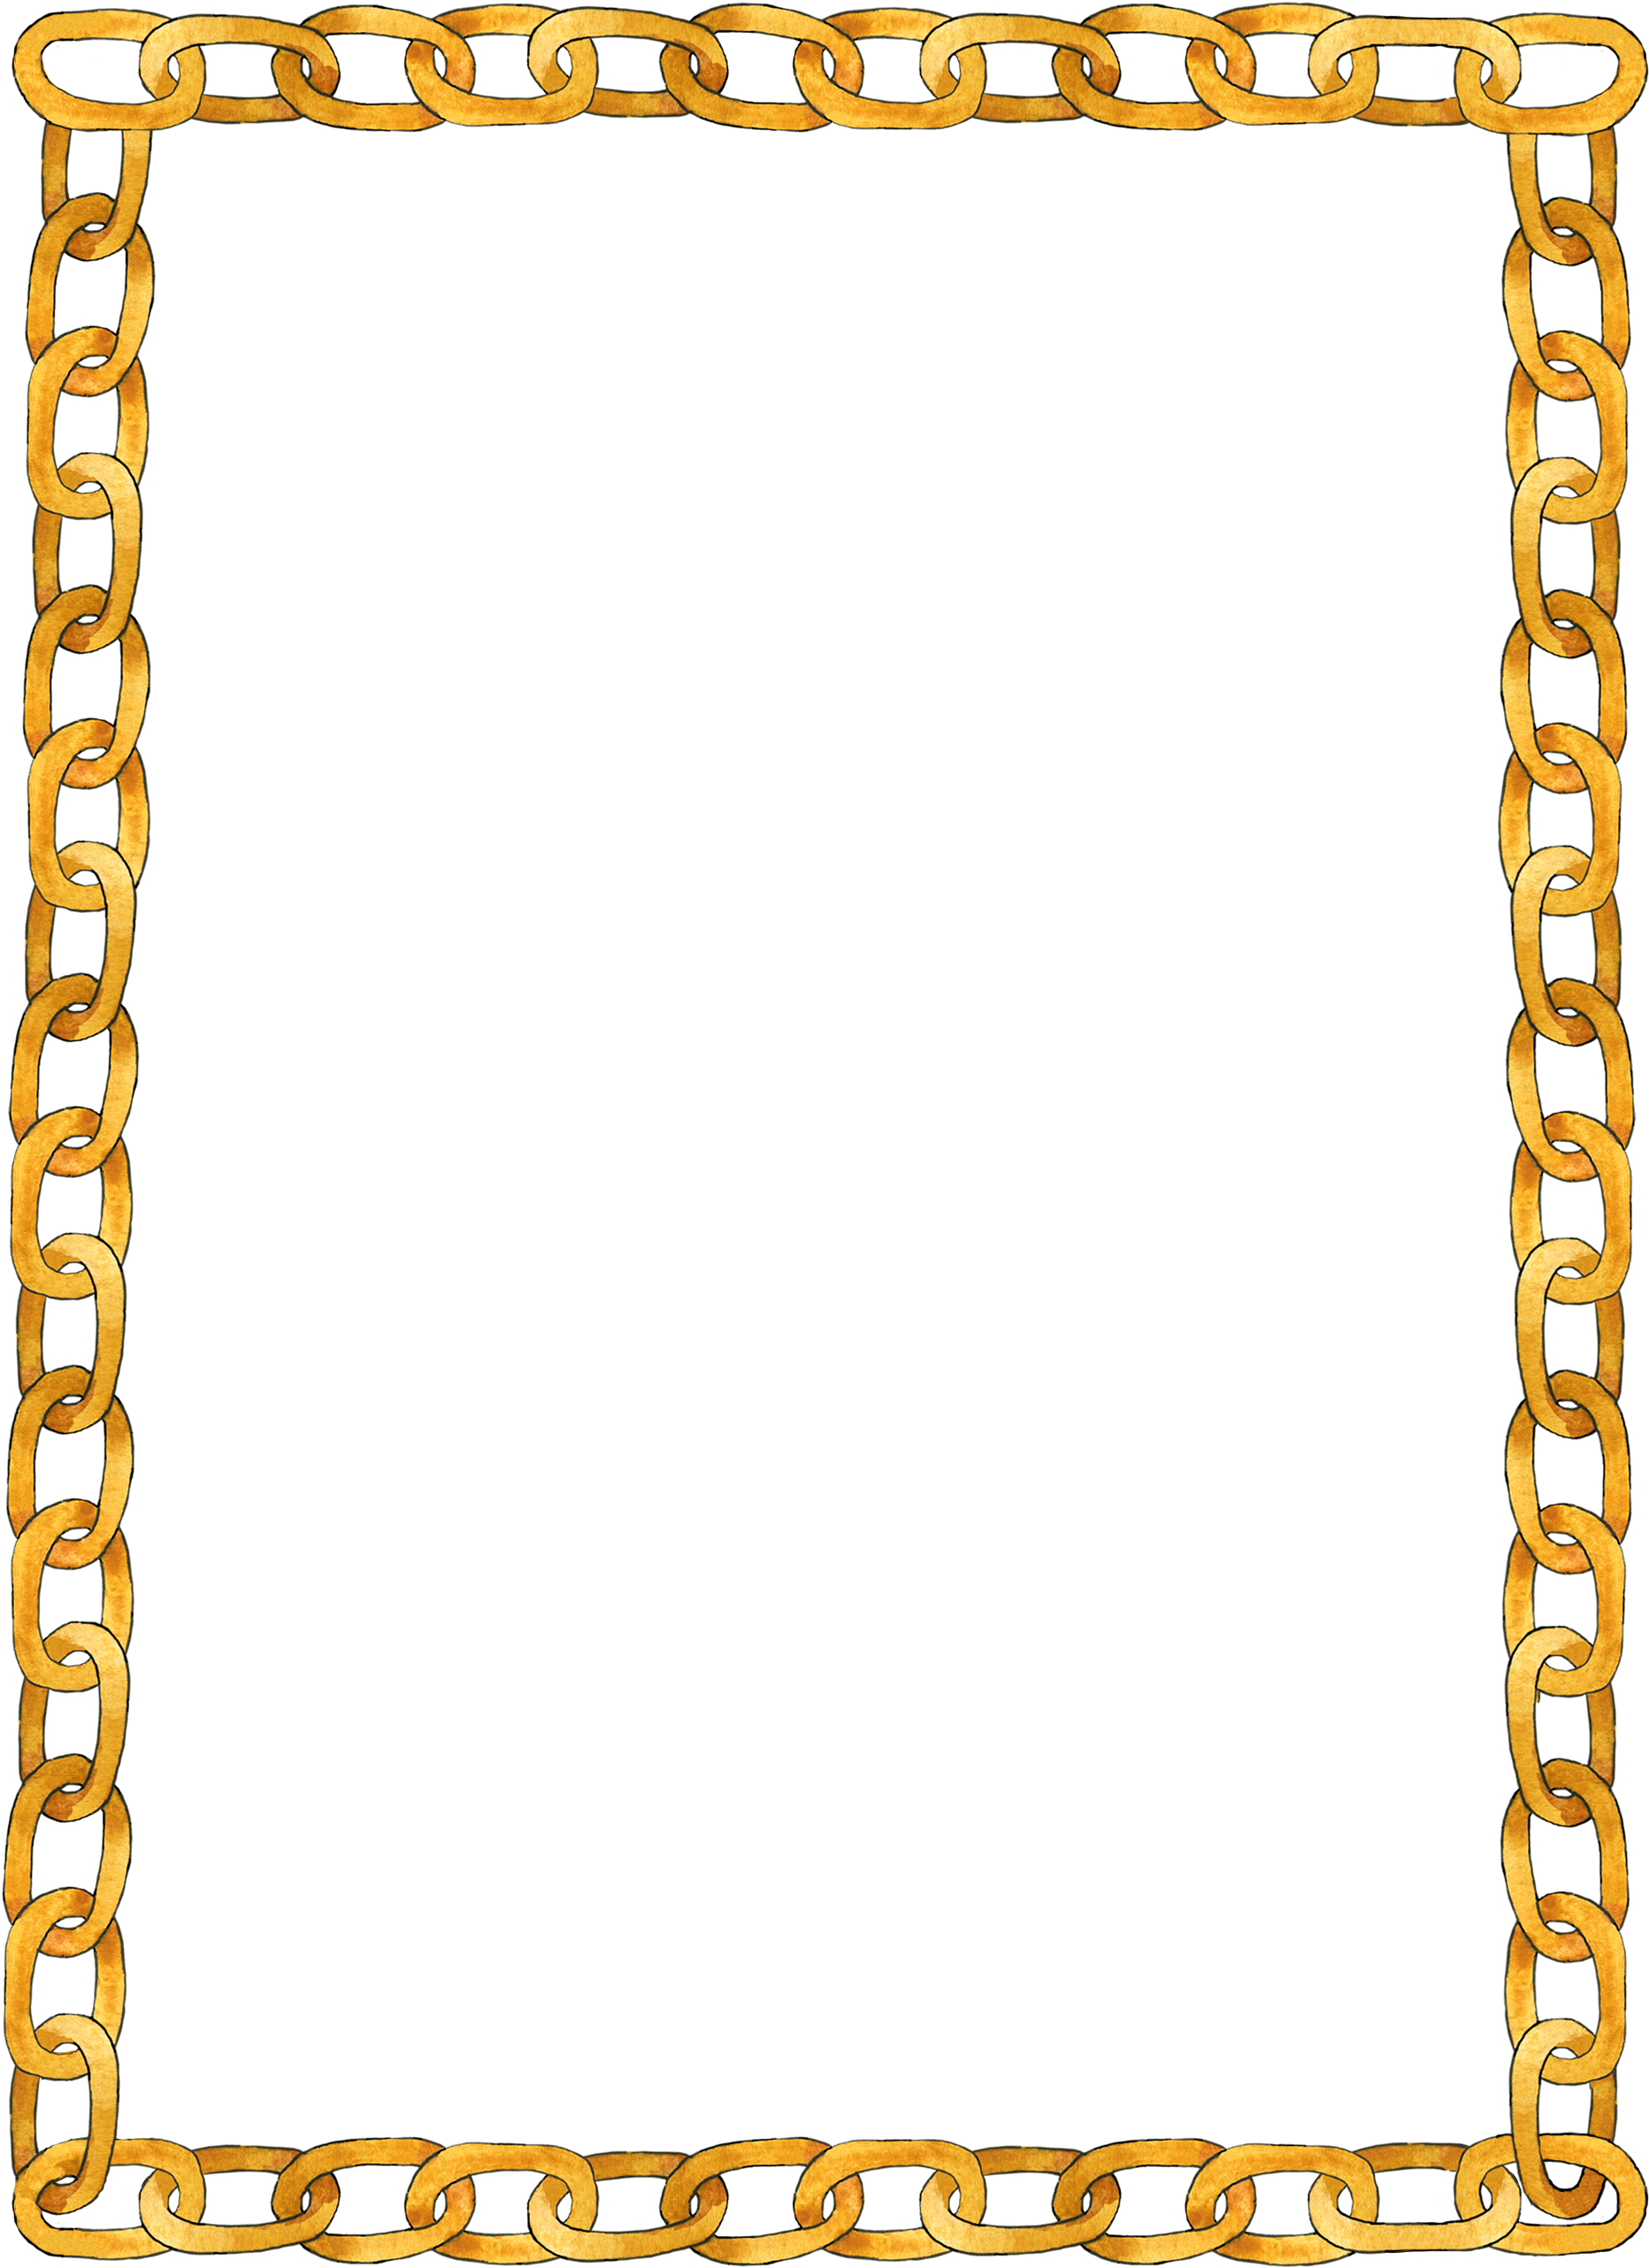 A Rectangular Frame Of Gold Chains